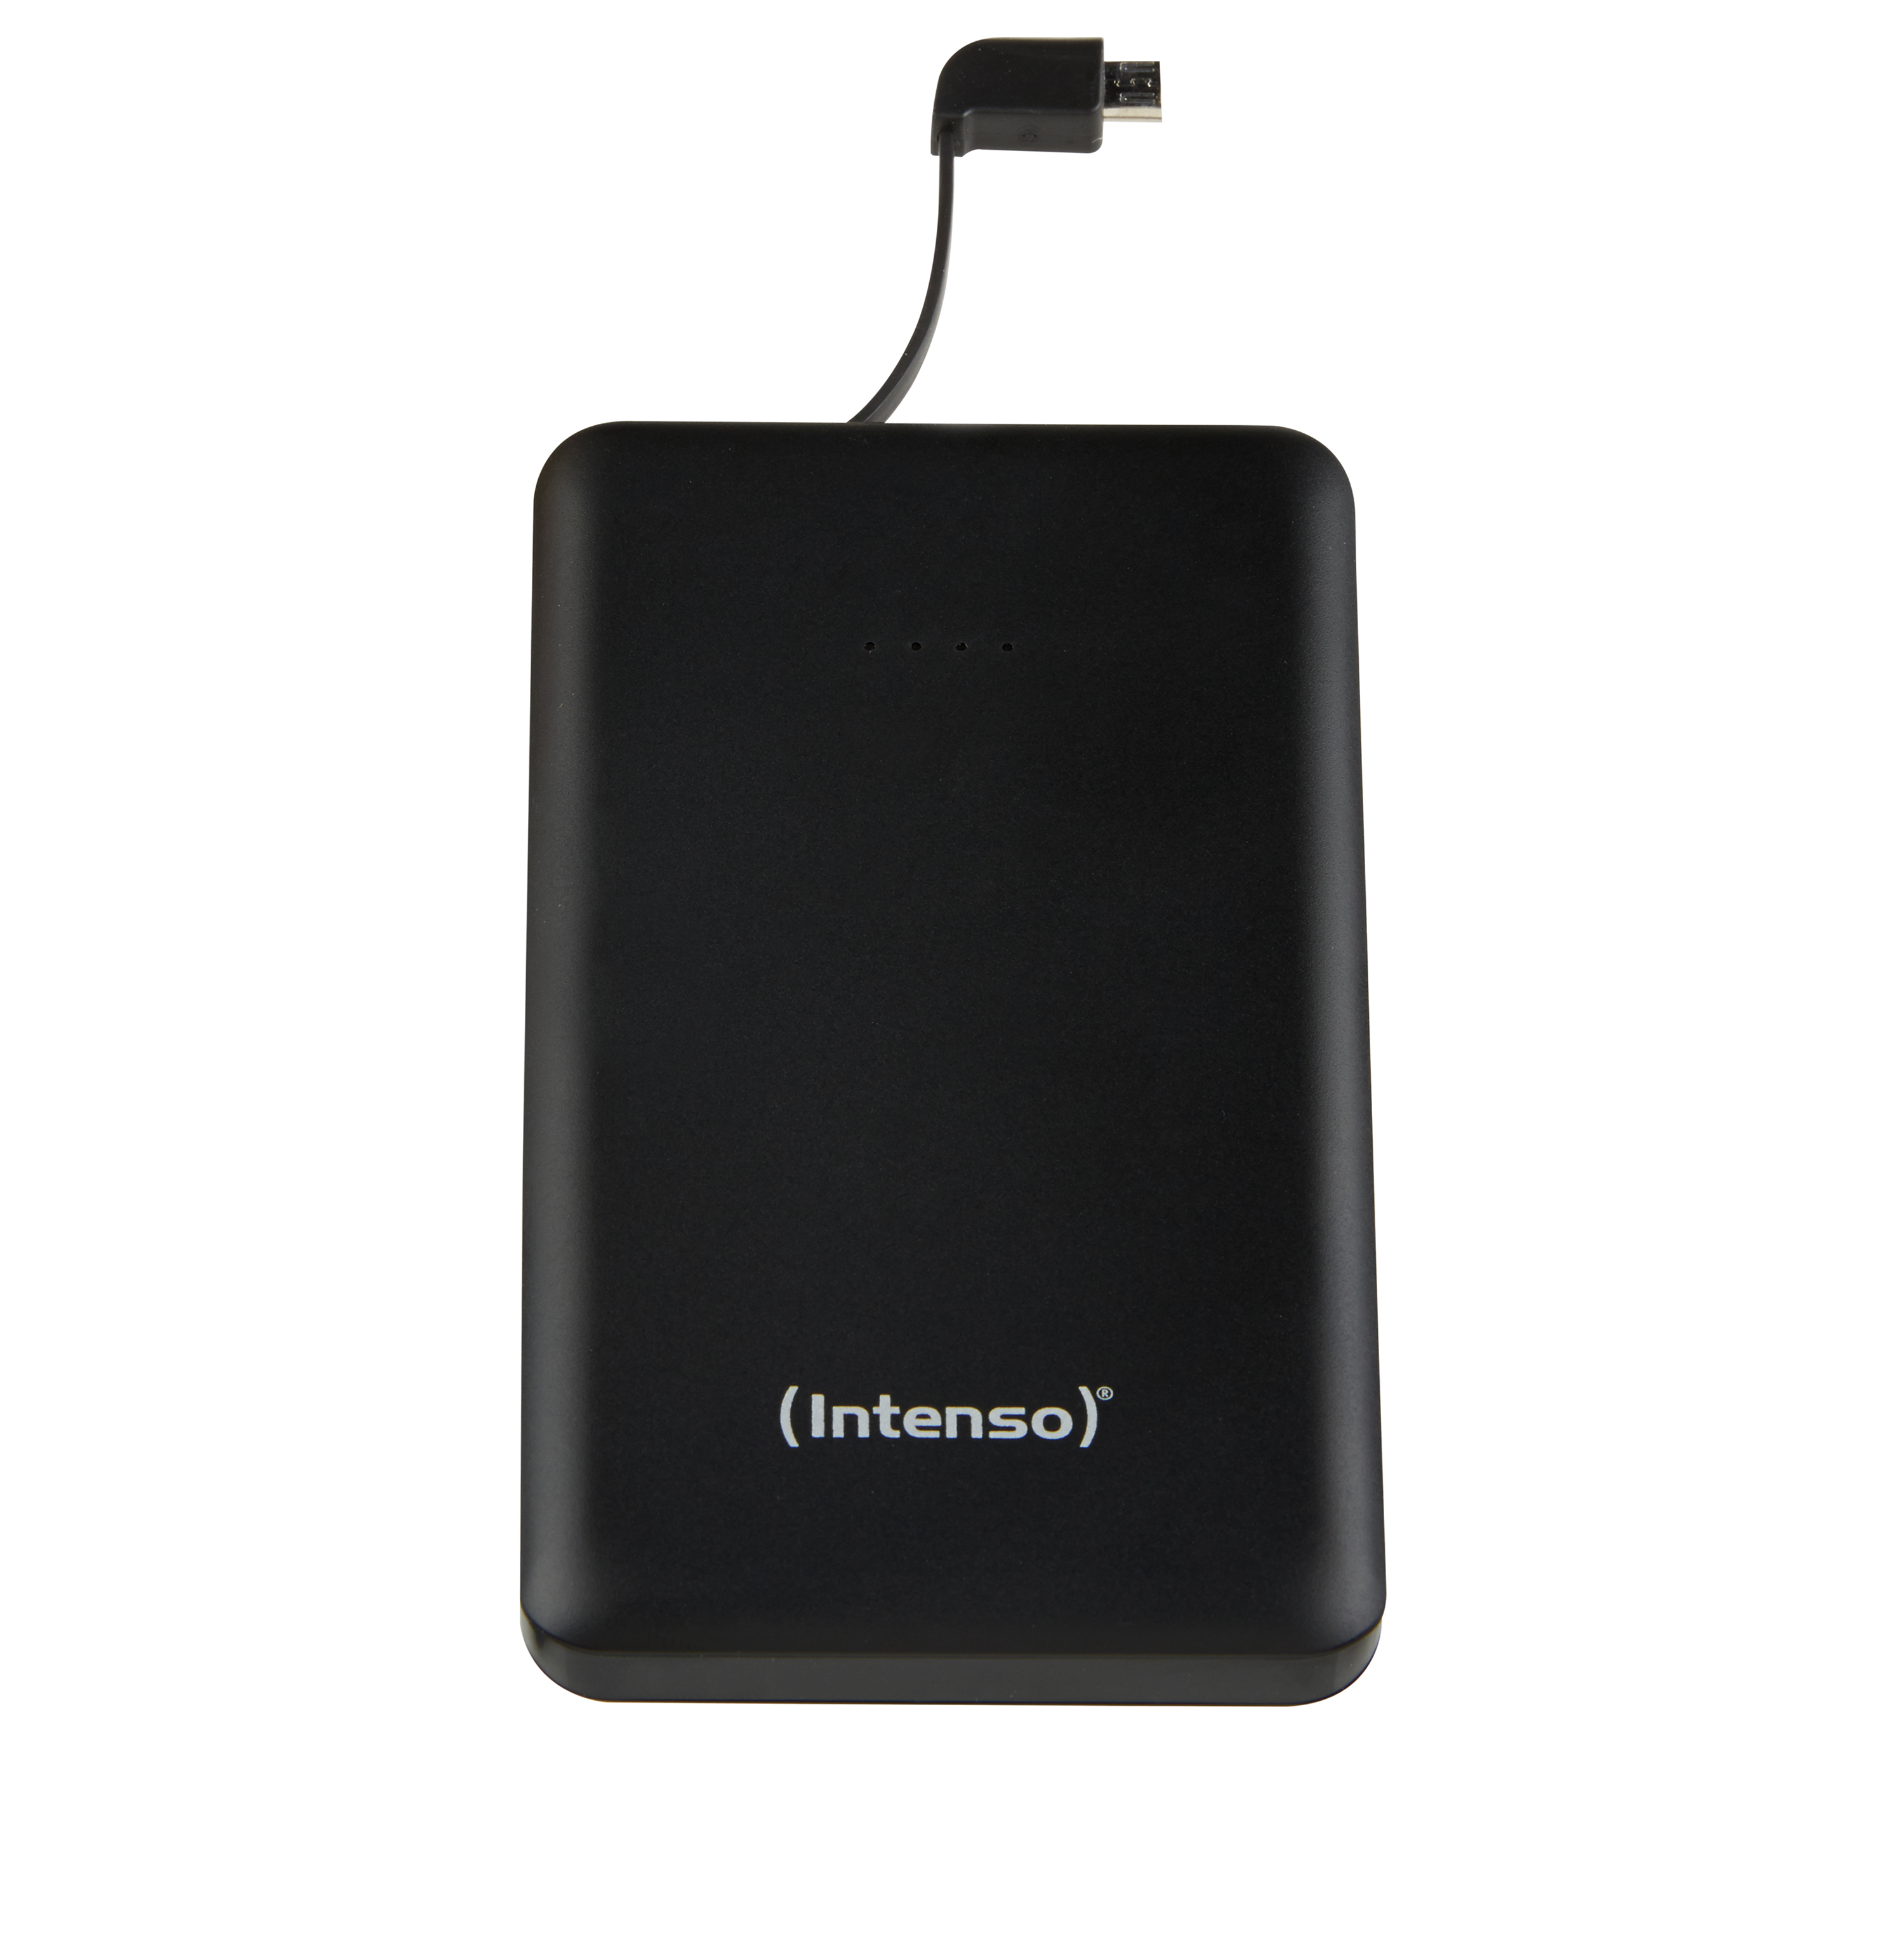 Intenso Powerbank Slim S10000 - Powerbank - 10000 mAh - 2.1 A (USB)